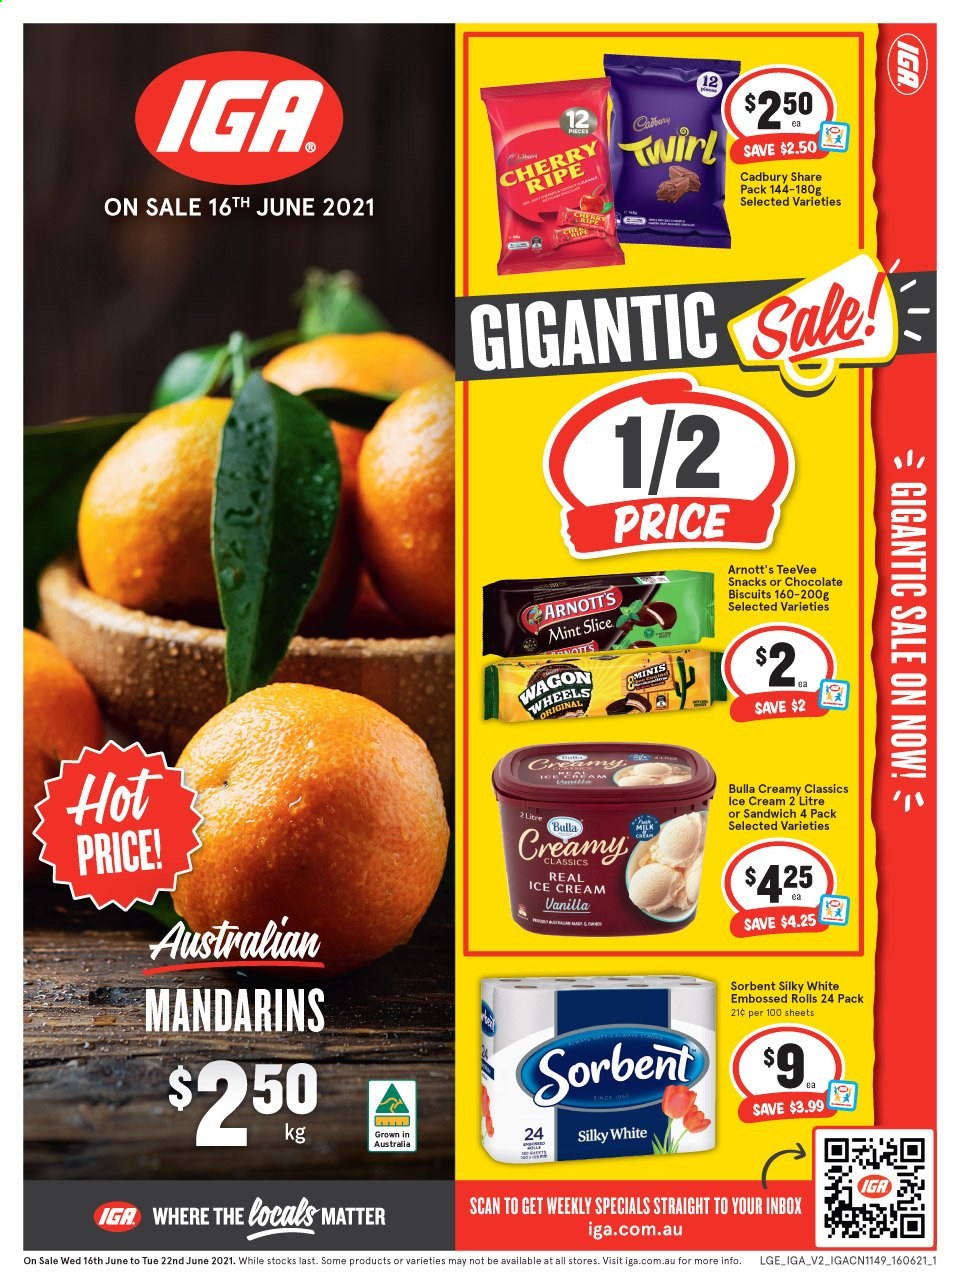 thumbnail - IGA Catalogue - 16 Jun 2021 - 22 Jun 2021 - Sales products - mandarines, cherries, sandwich, ice cream, snack, biscuit, Cadbury. Page 1.